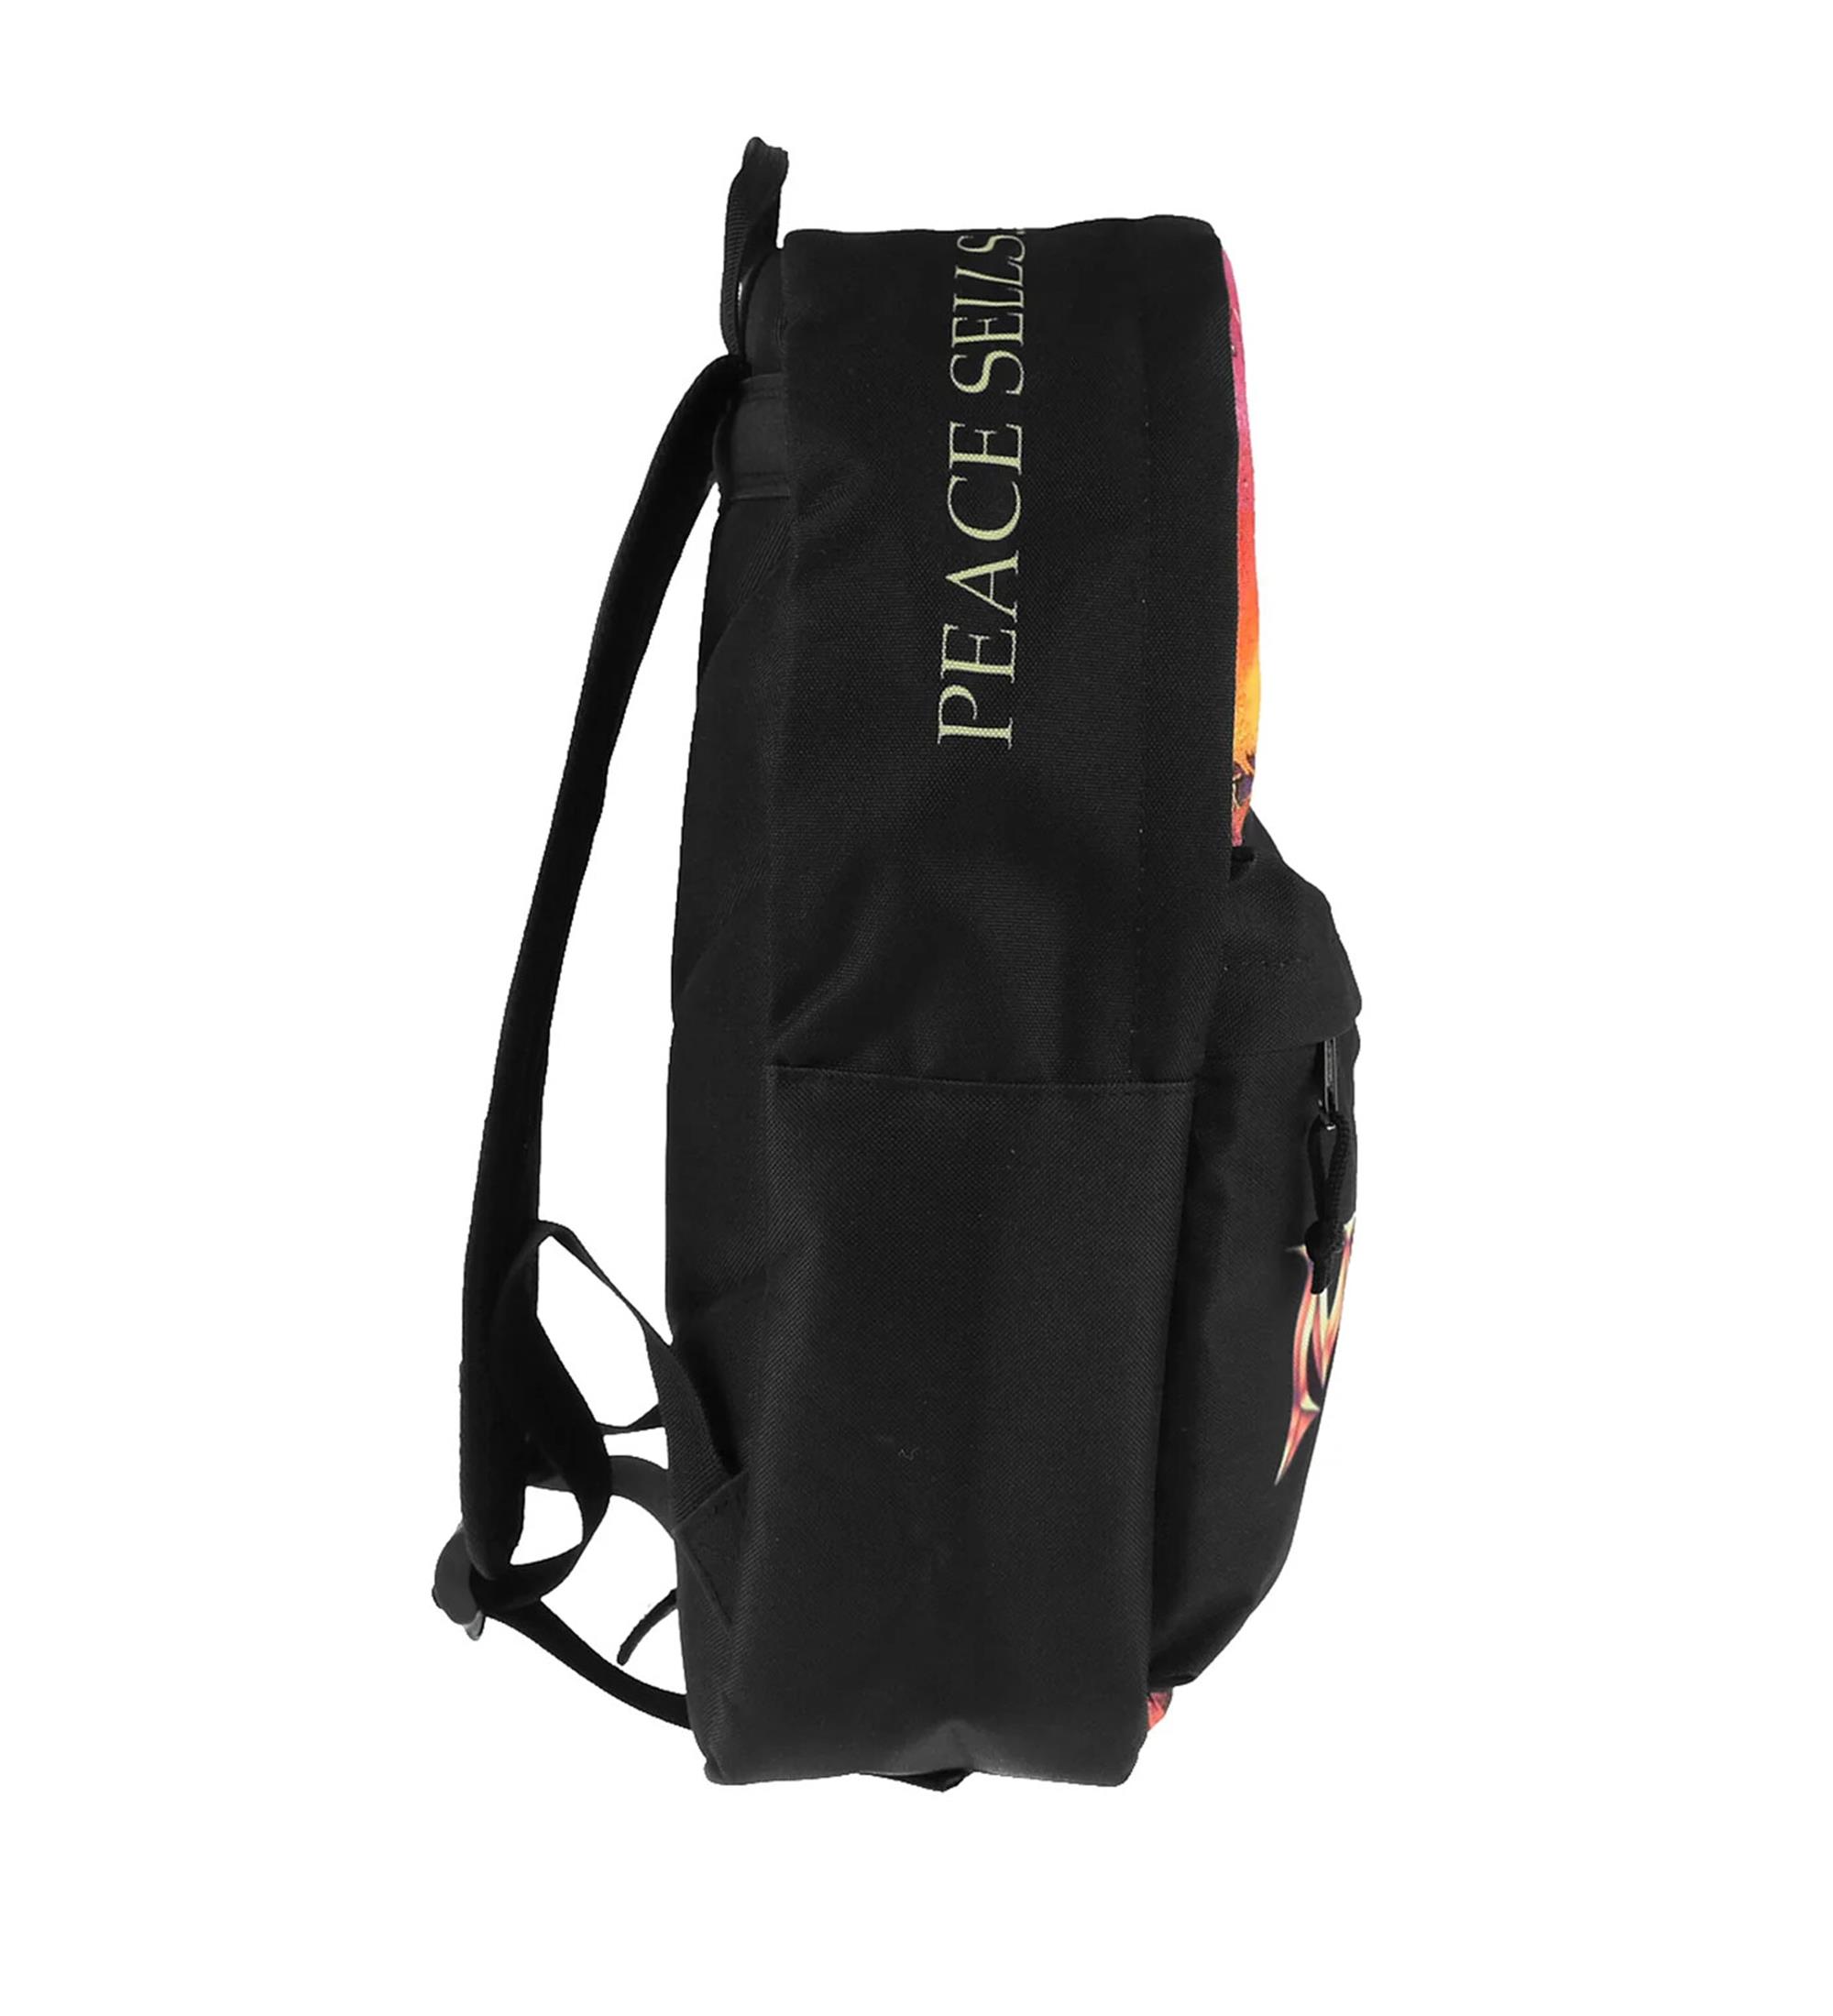 Peace Sells Backpack